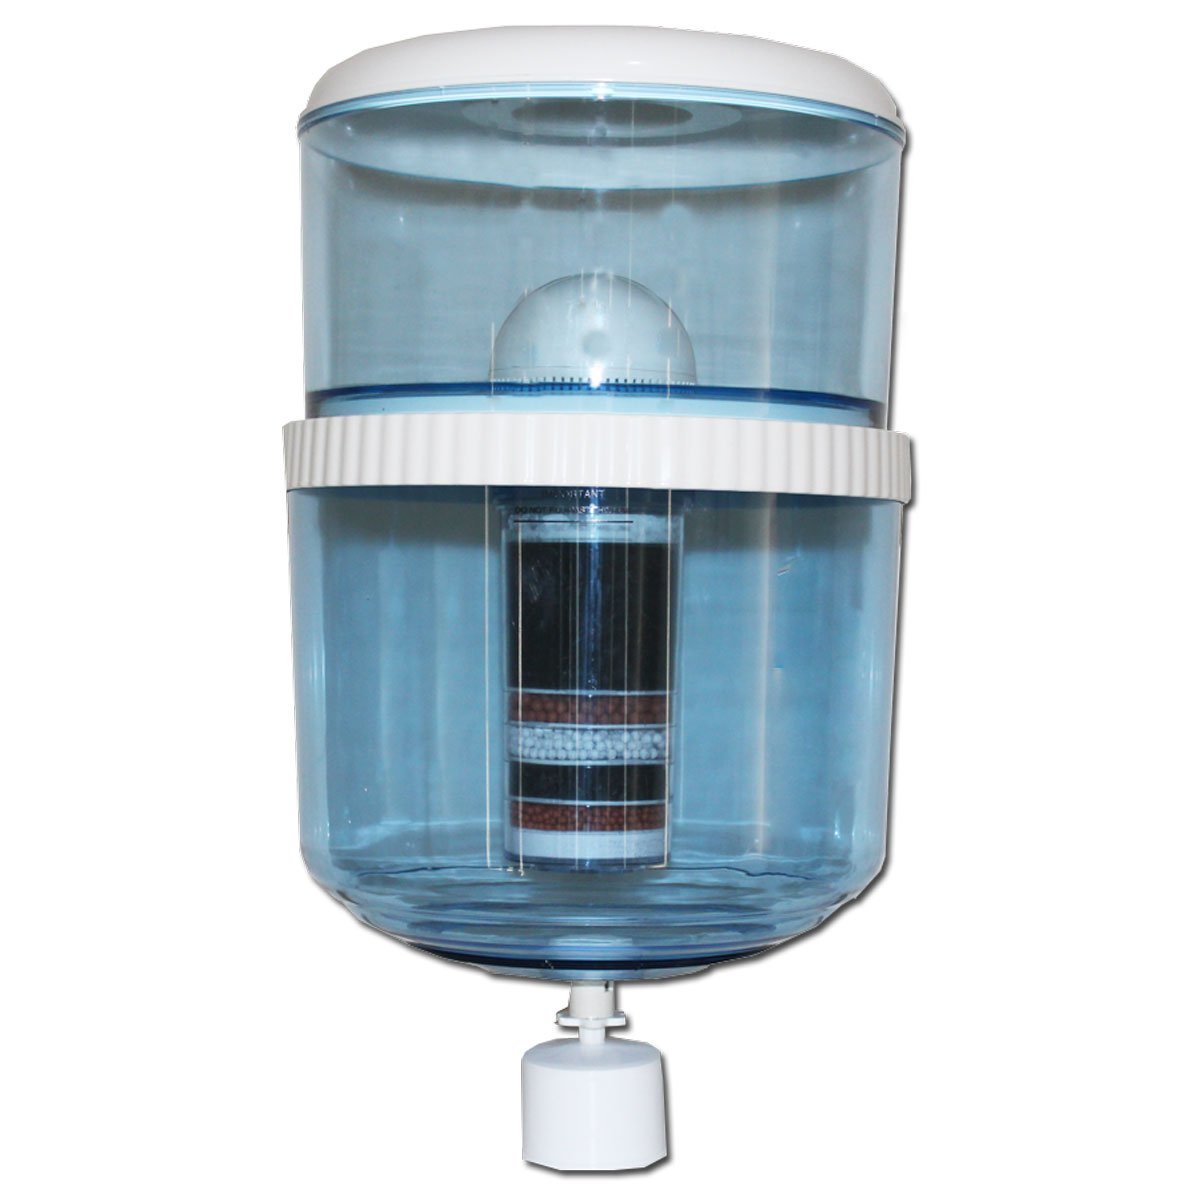 Aimex 8 Stage Water Filter Replacement Cartridge - 2pck - Mari Australia